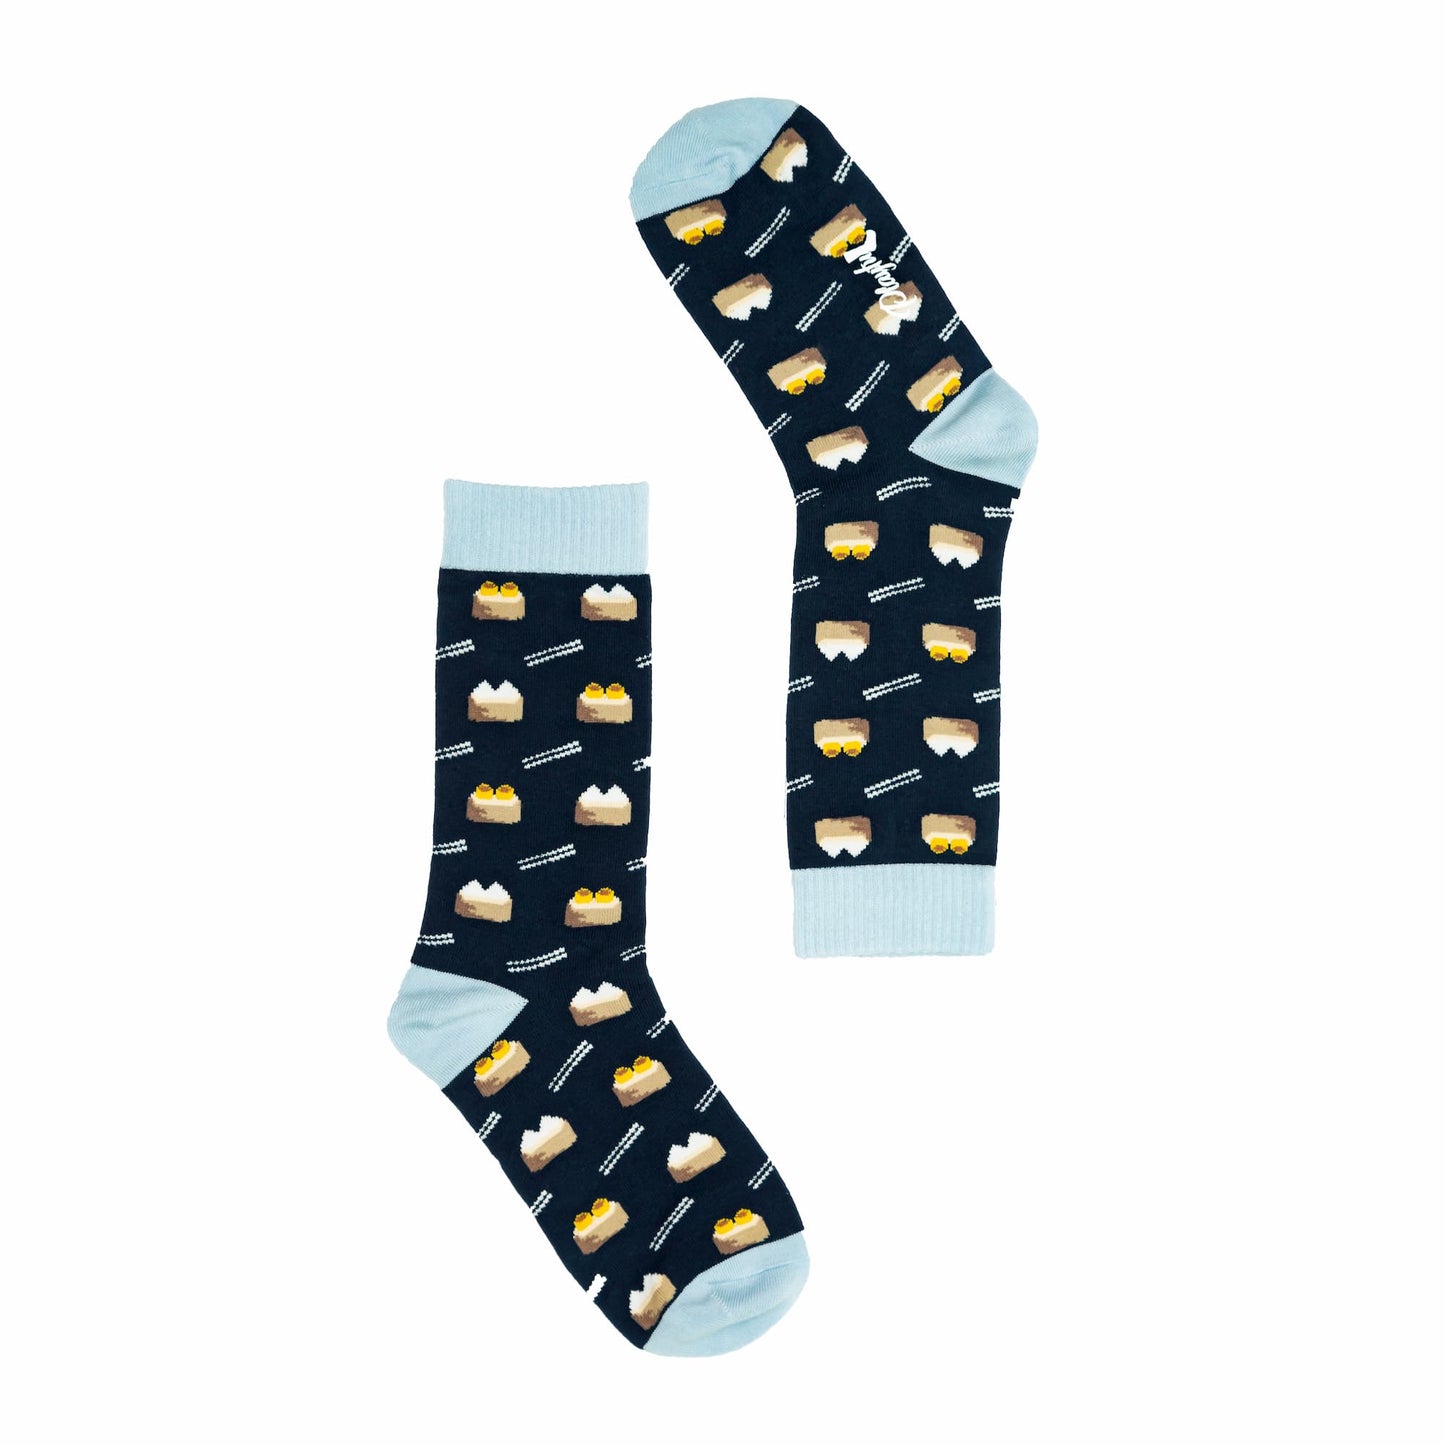 Dim Sum Socks by Playful - BetterThanFlowers